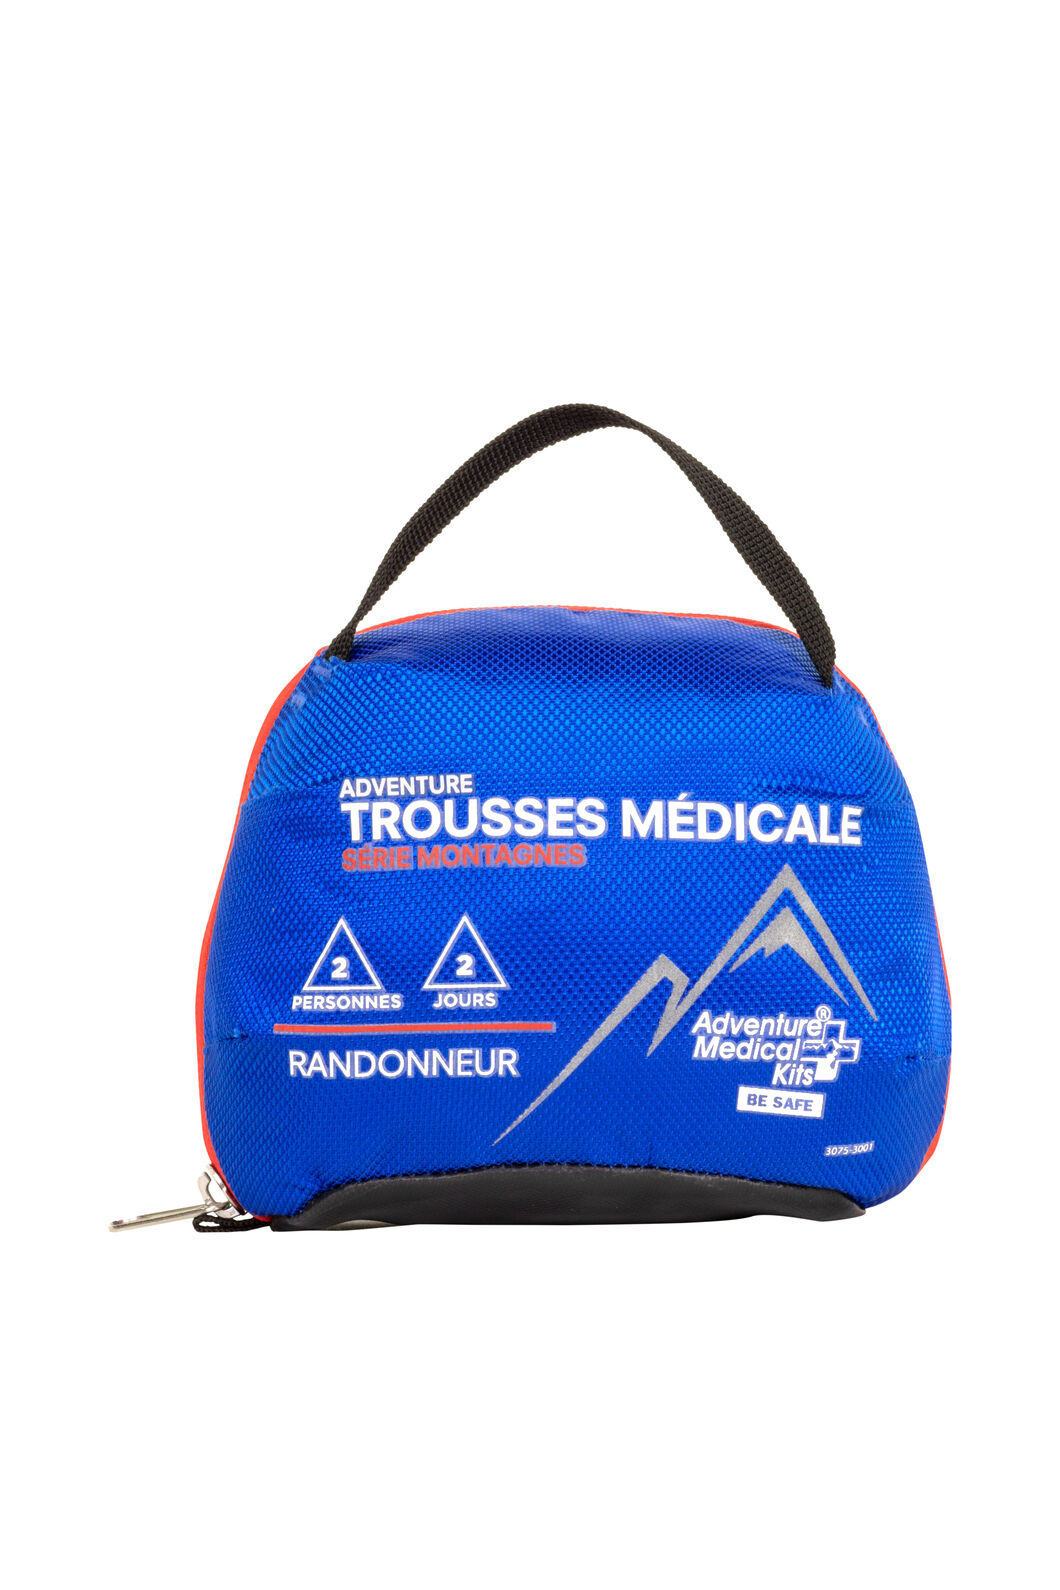 Adventure Medical Kits Mountain Series Hiker First Aid Kit